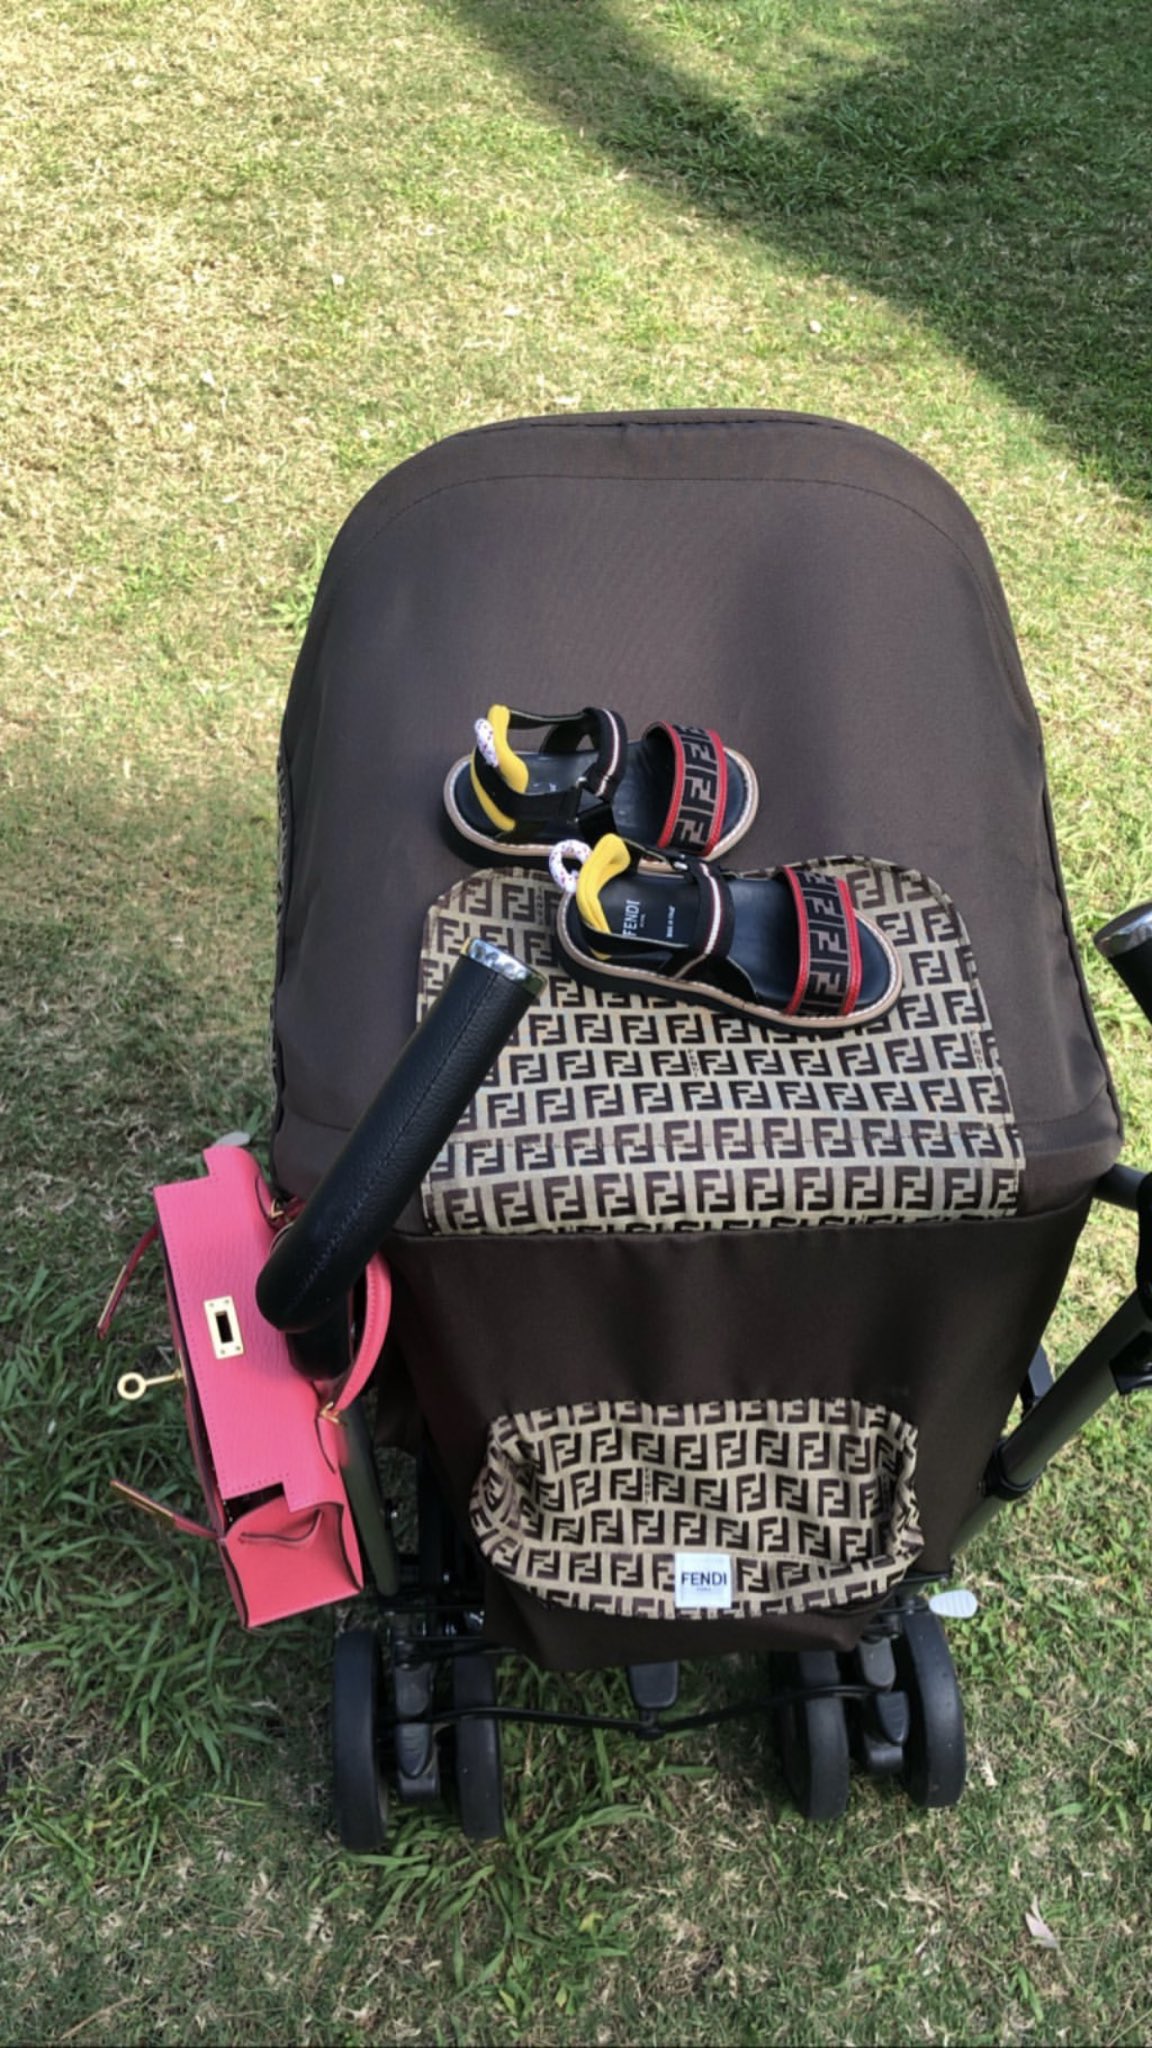 Stormi's new @Fendi stroller and diaper bag